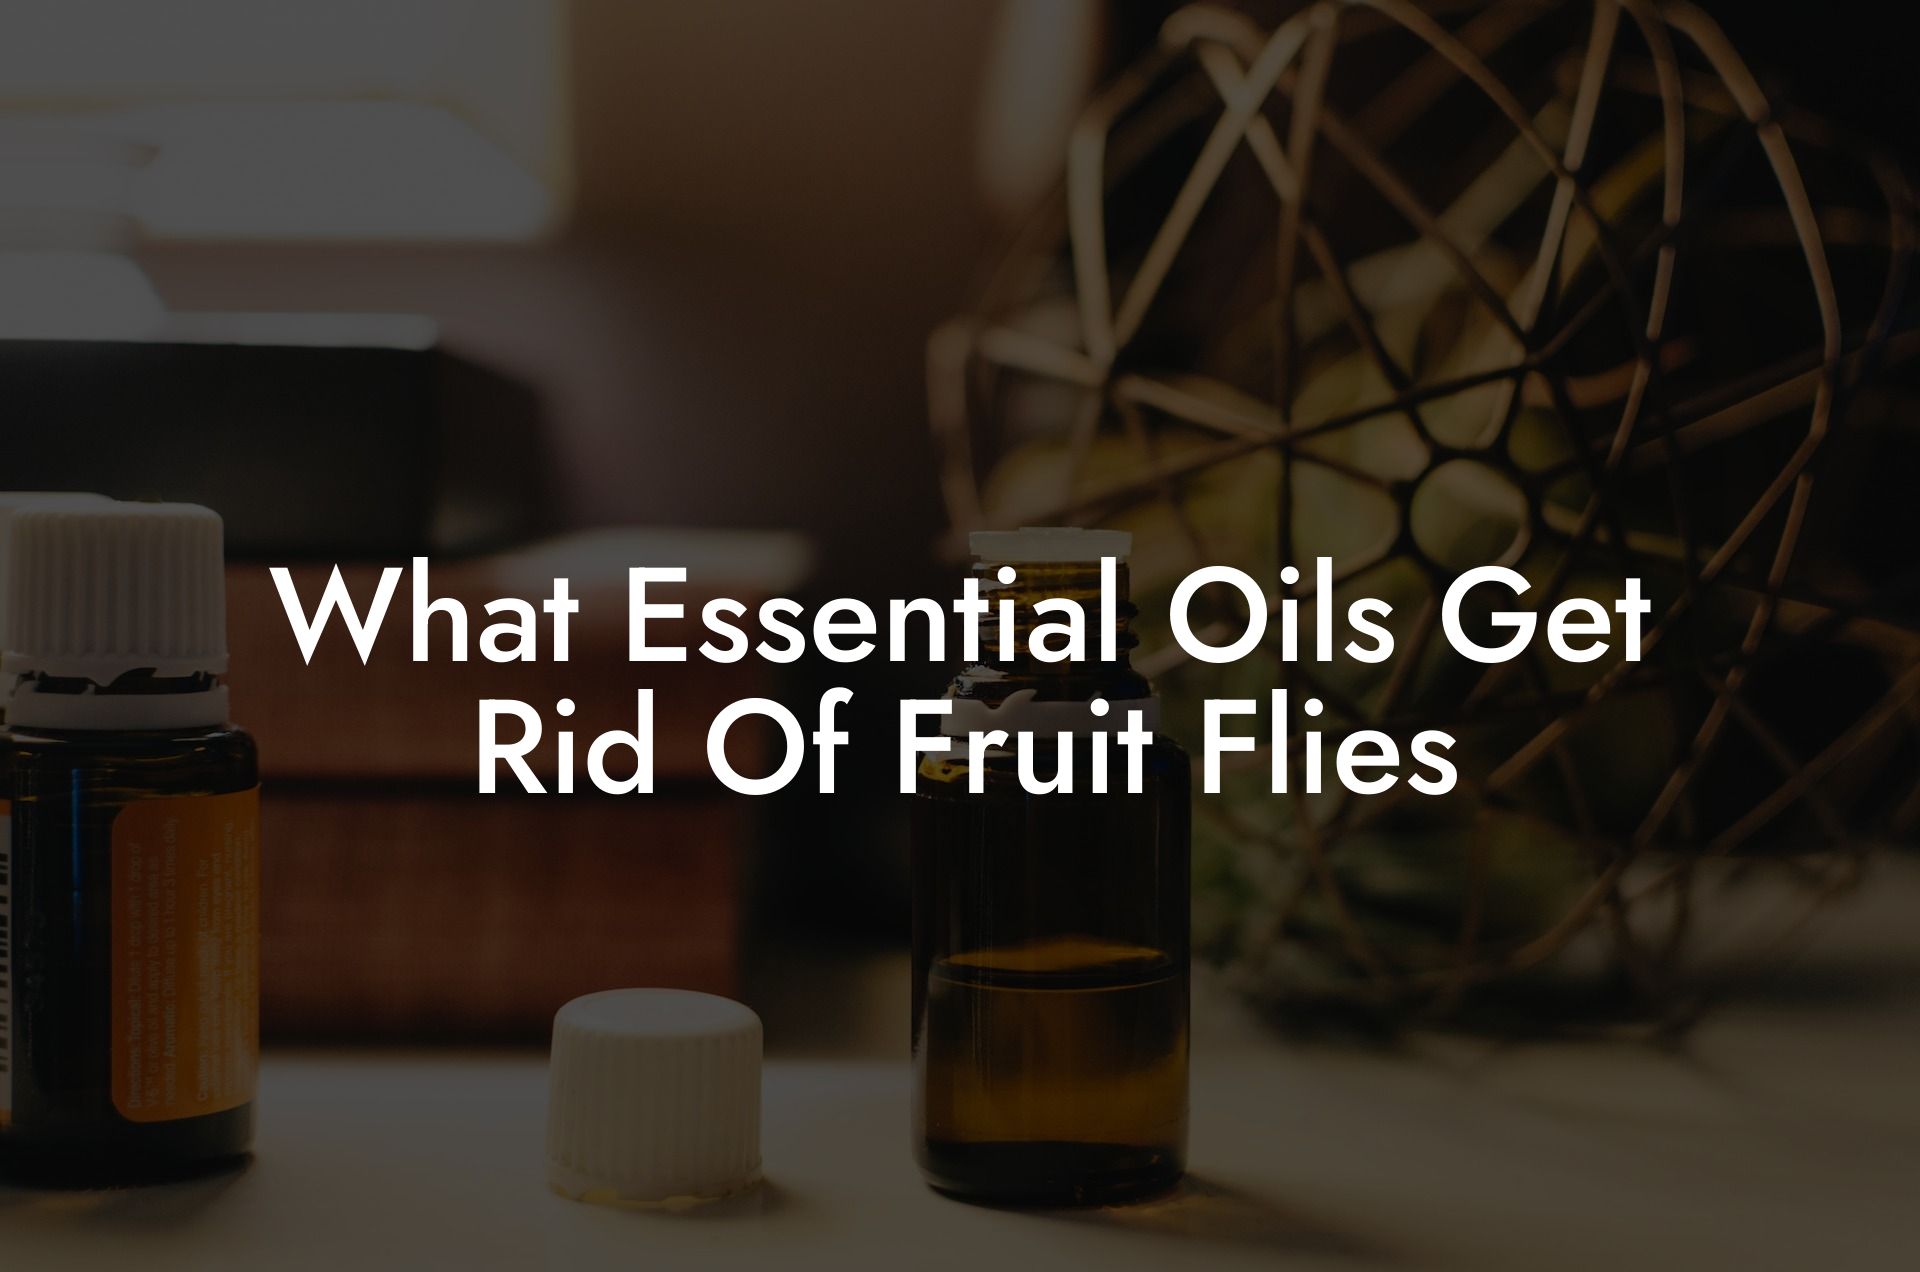 What Essential Oils Get Rid Of Fruit Flies